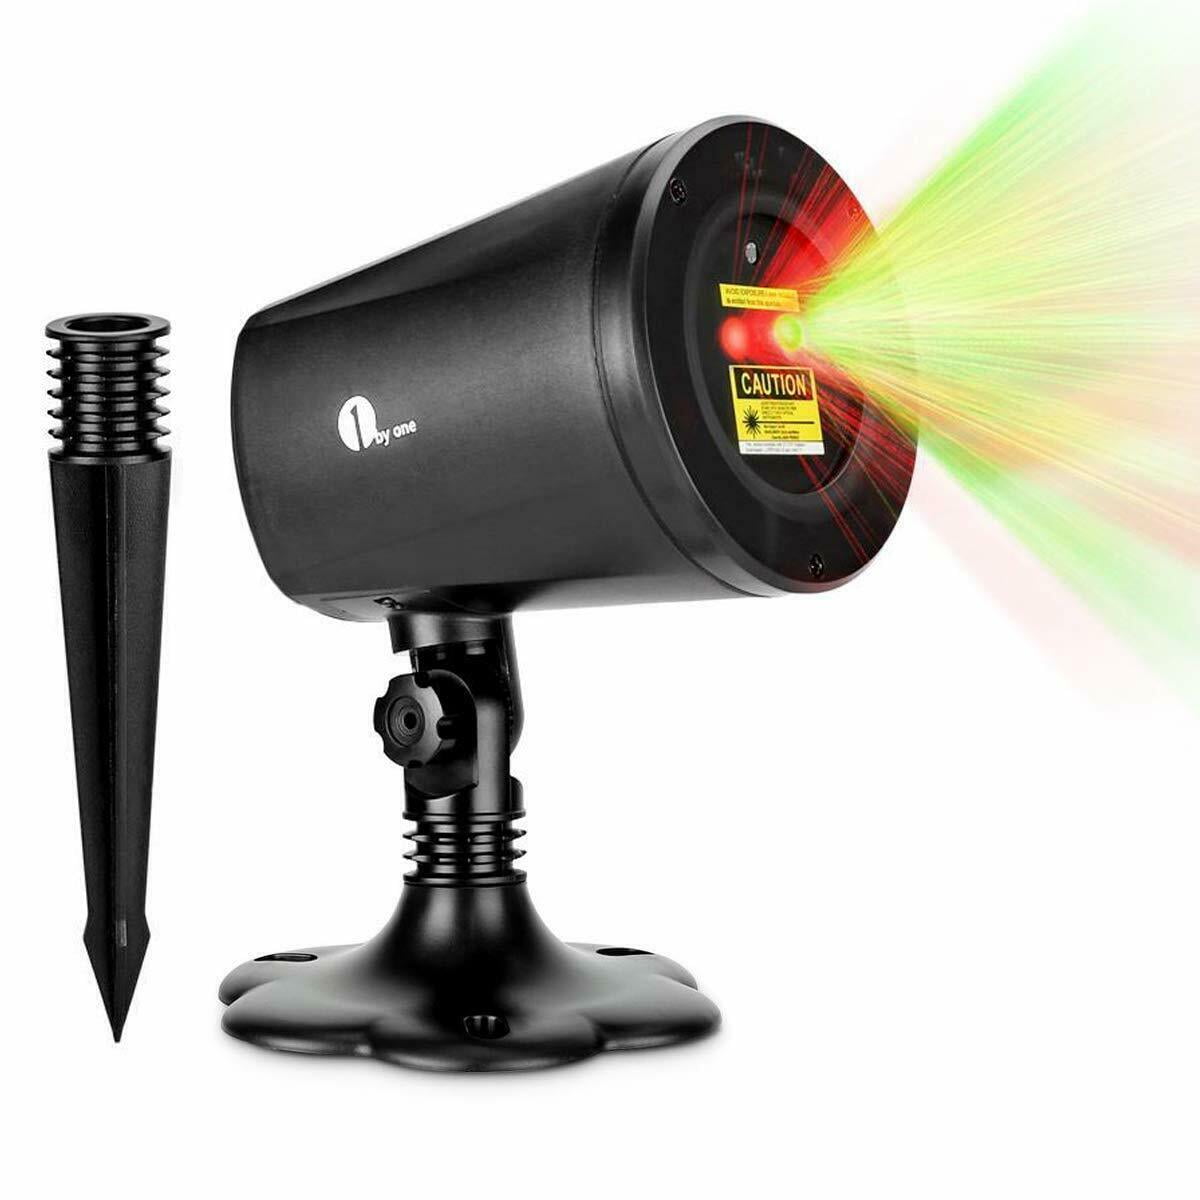 1byone Outdoor Moving LED Laser Light Projector Landscape Xmas Garden Lamp Flash 